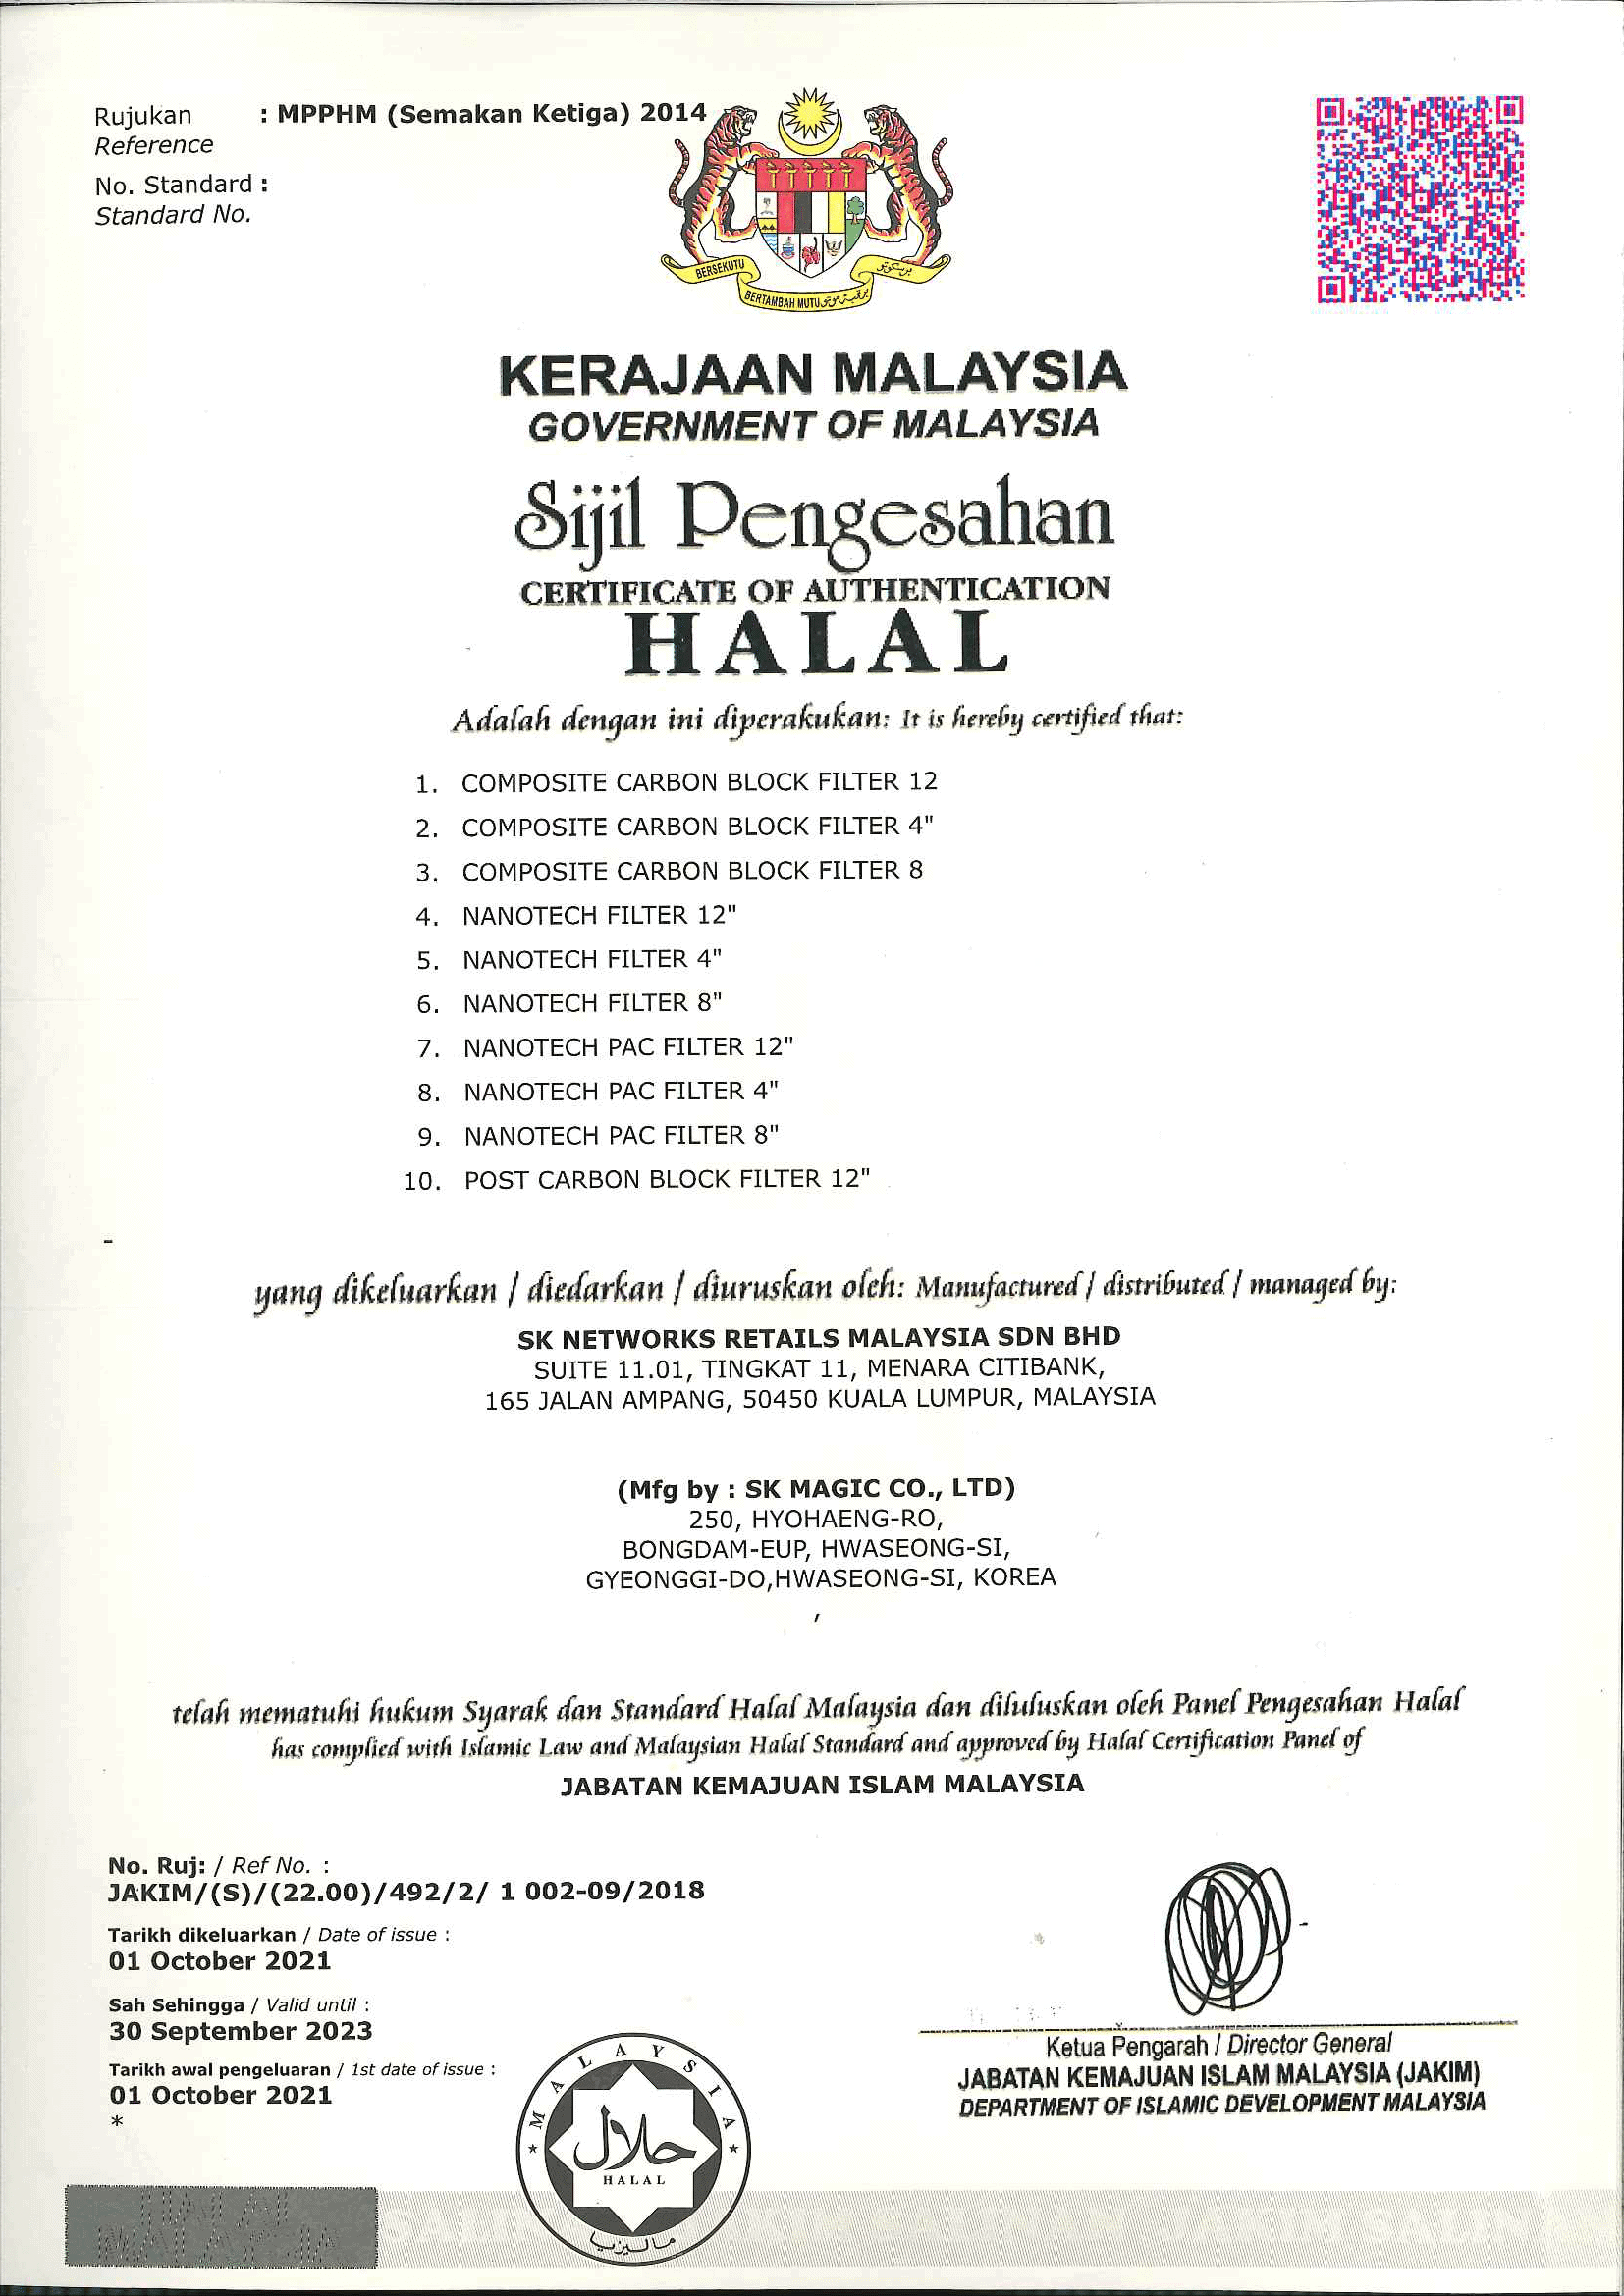 Halal Certificate @ 30.09.2023-1